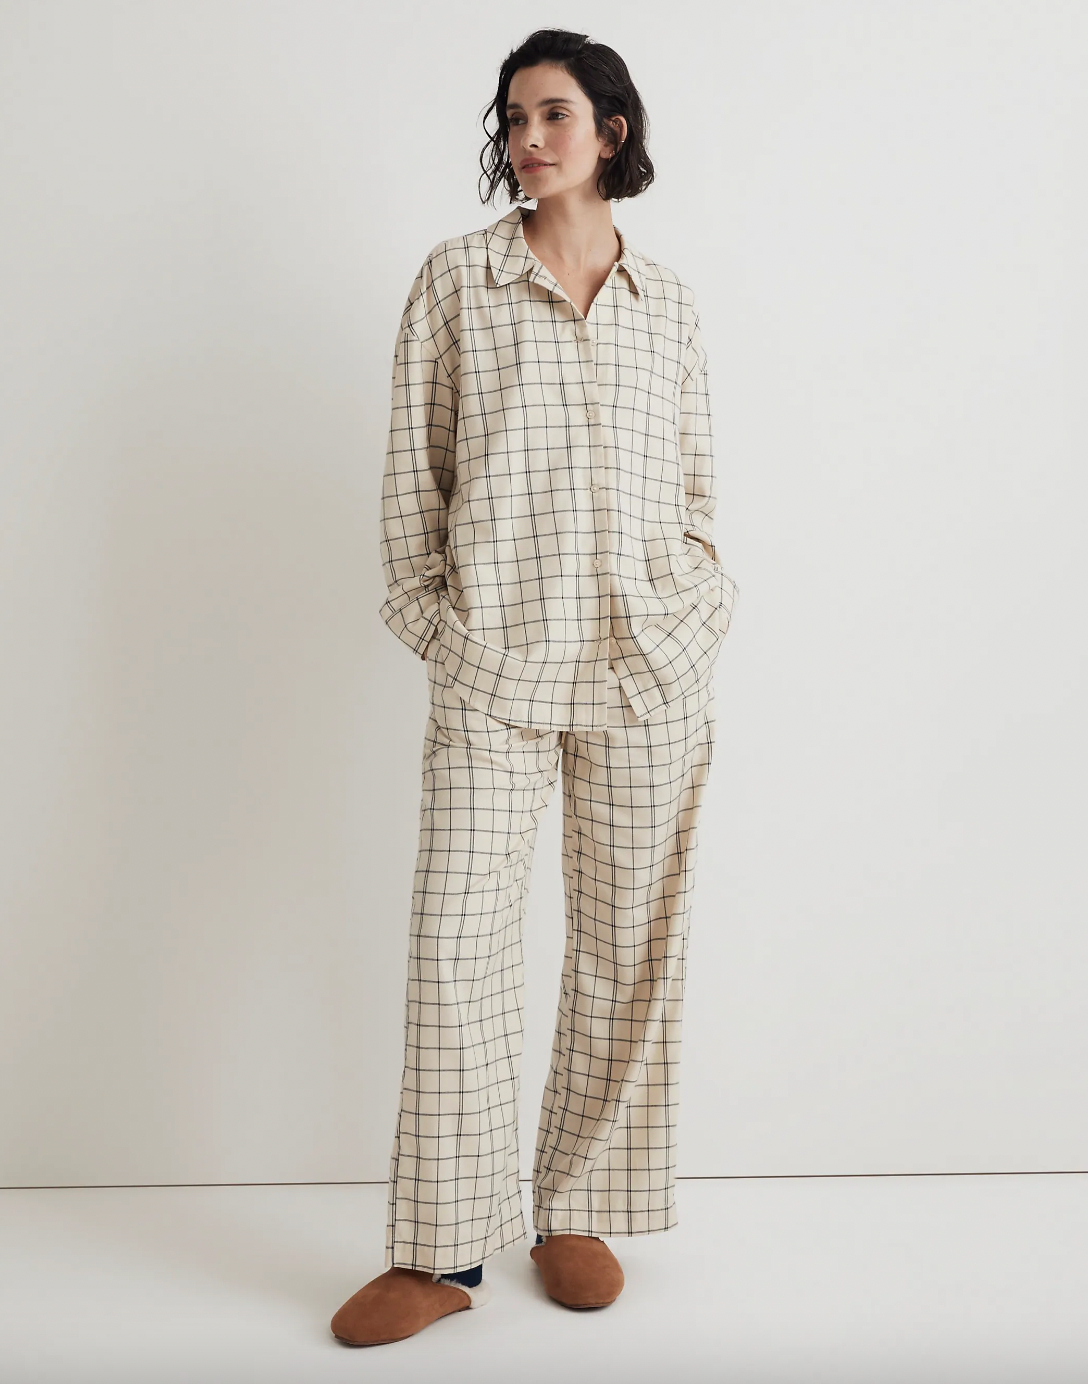 Hibernate In The Season's Best Cozy Flannel Pajamas All Winter Long